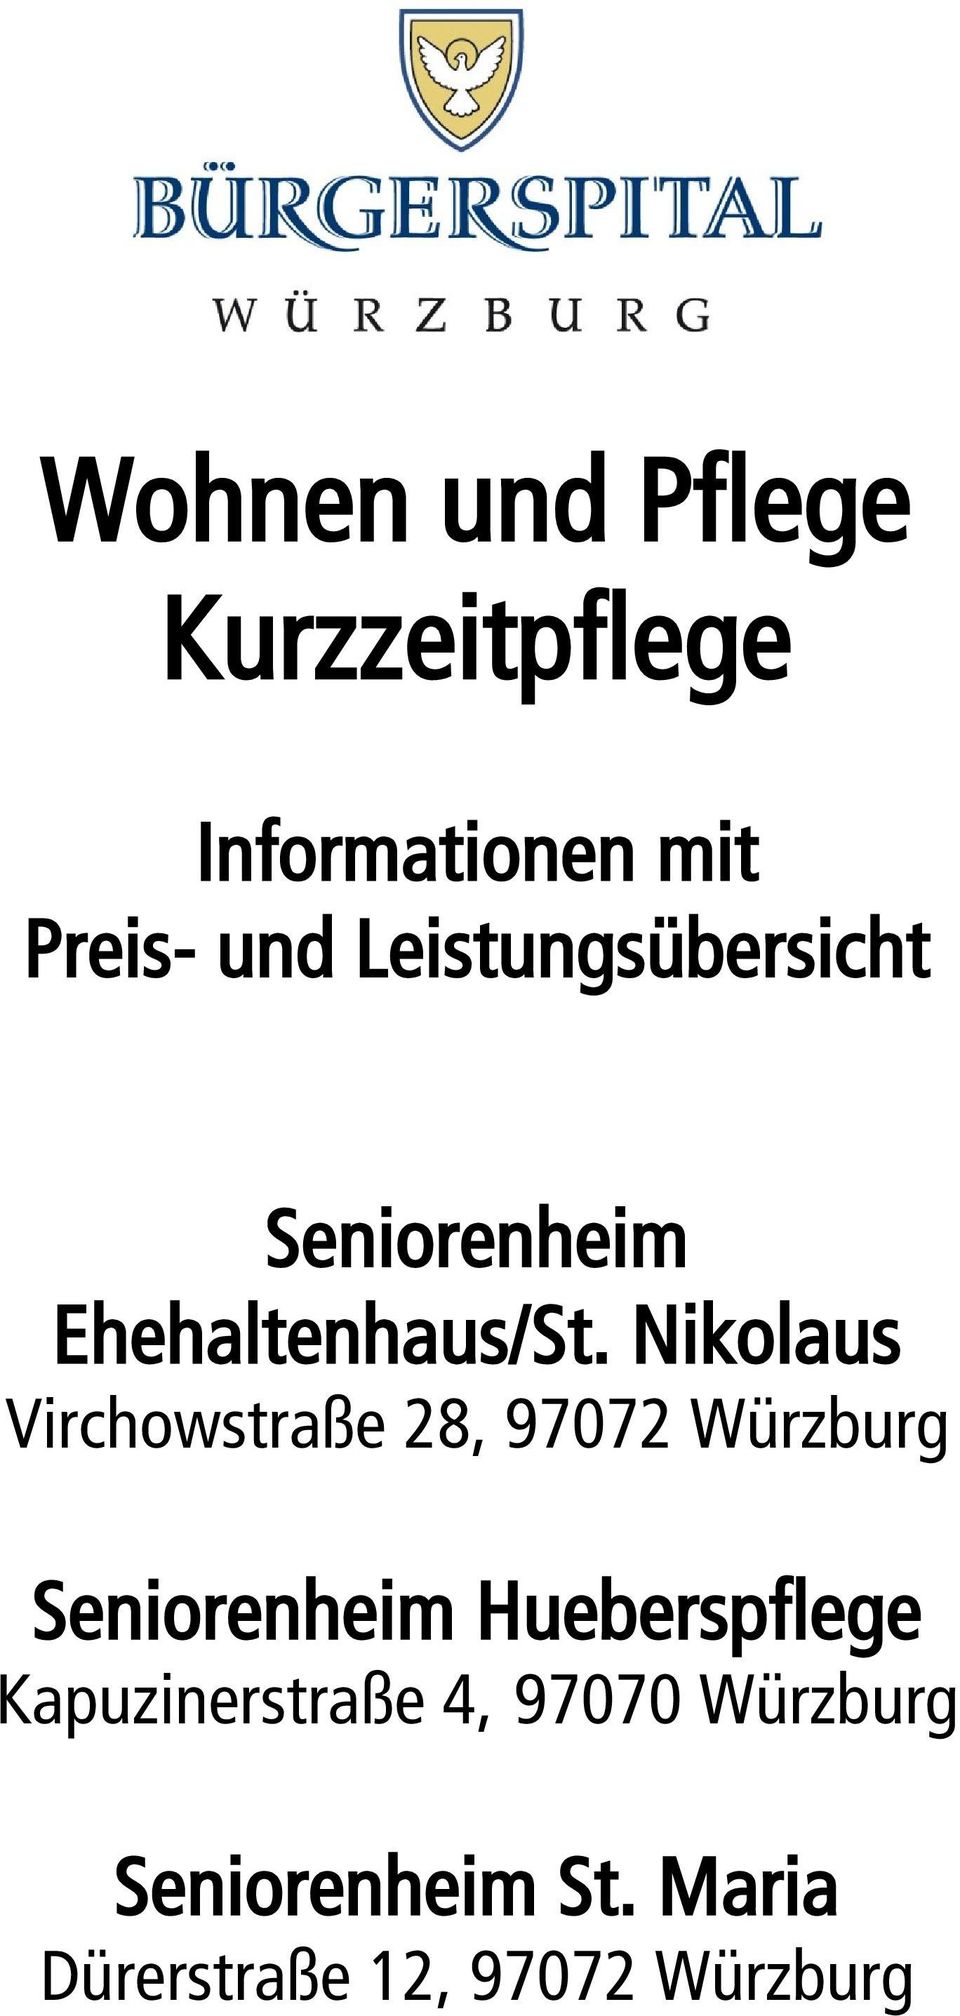 Nikolaus Virchowstraße 28, 97072 Würzburg Seniorenheim